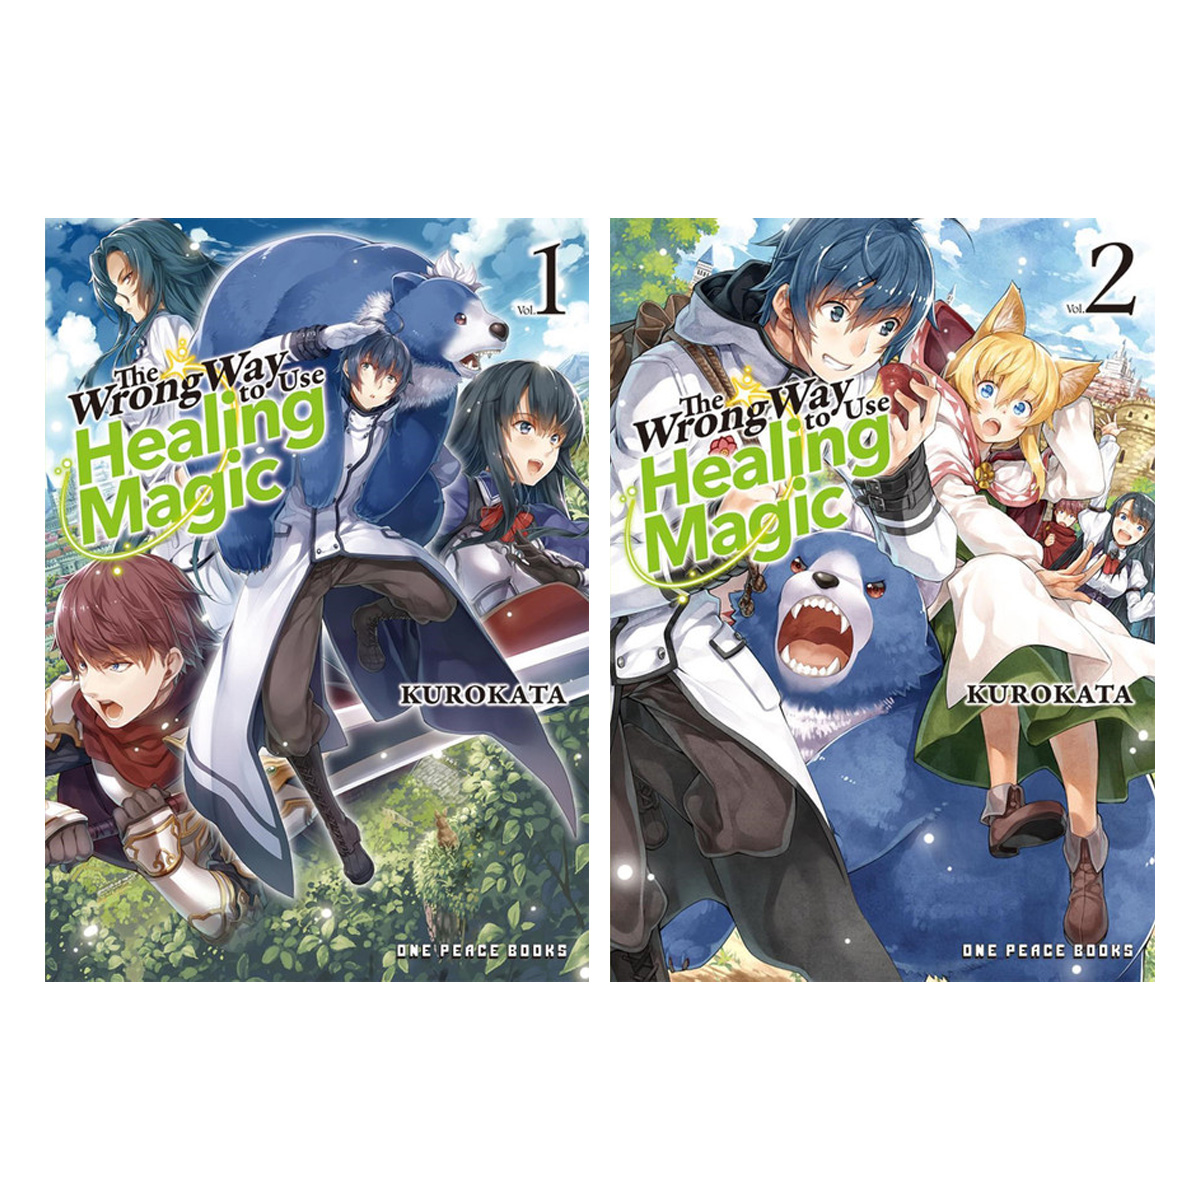 The Wrong Way to Use Healing Magic Novel 1 - Review - Anime News